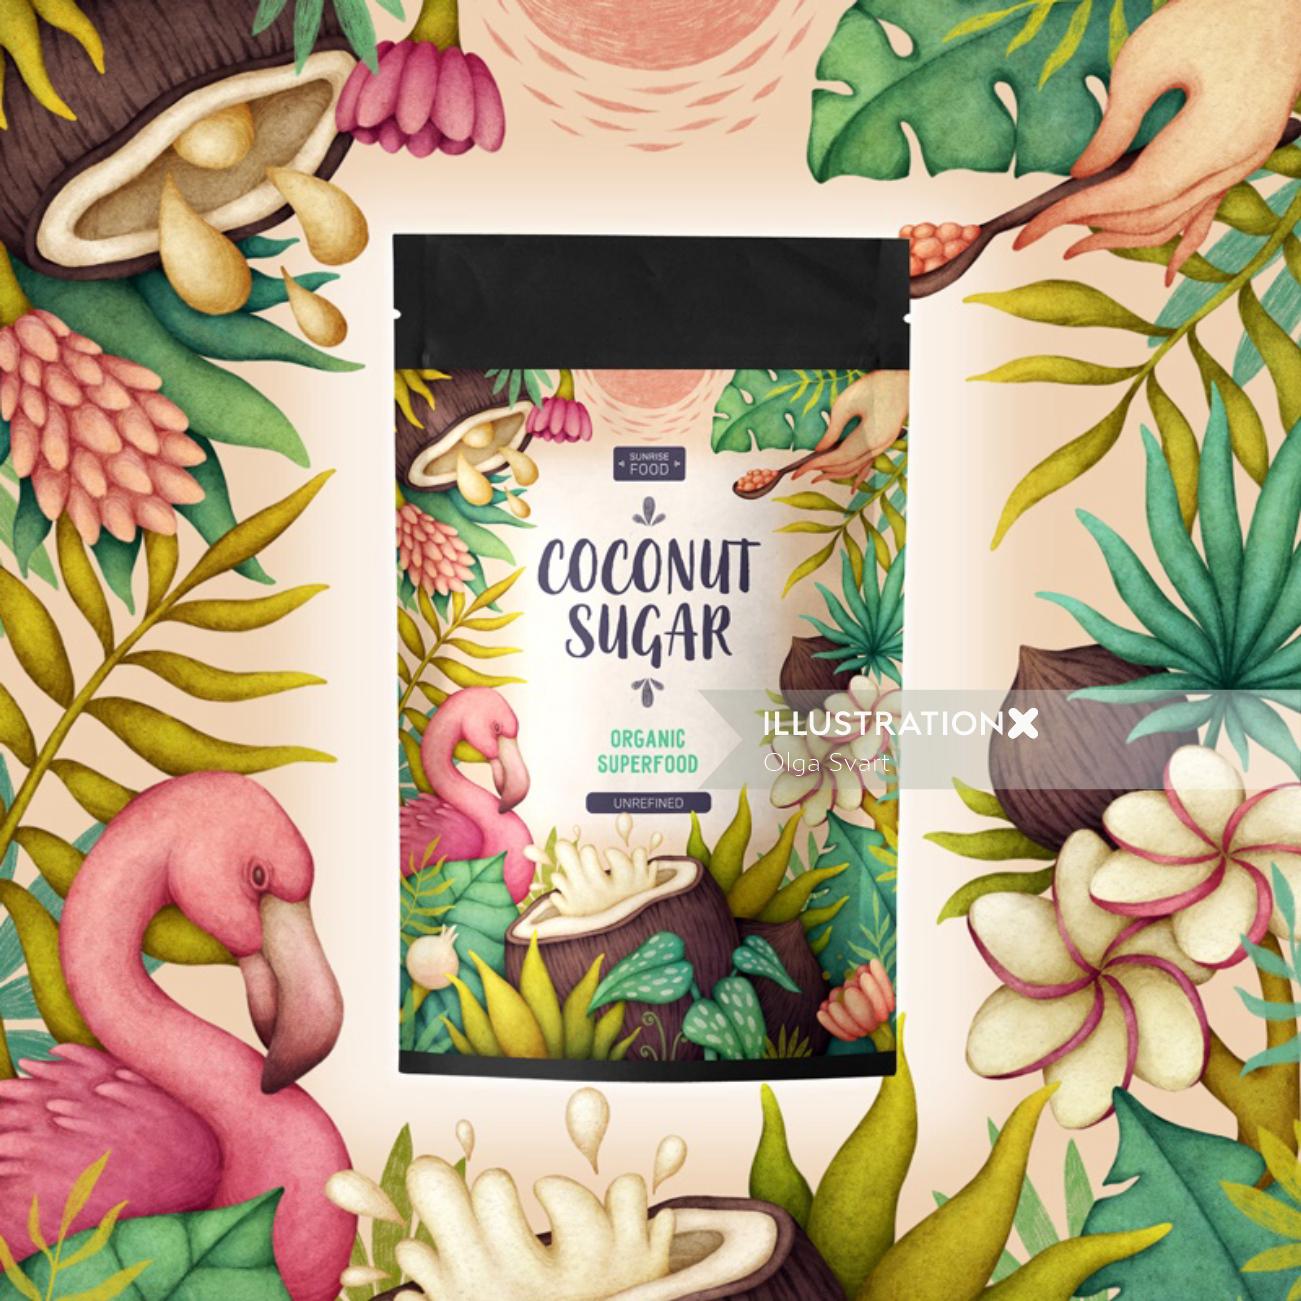 Packaging design of coconut sugar